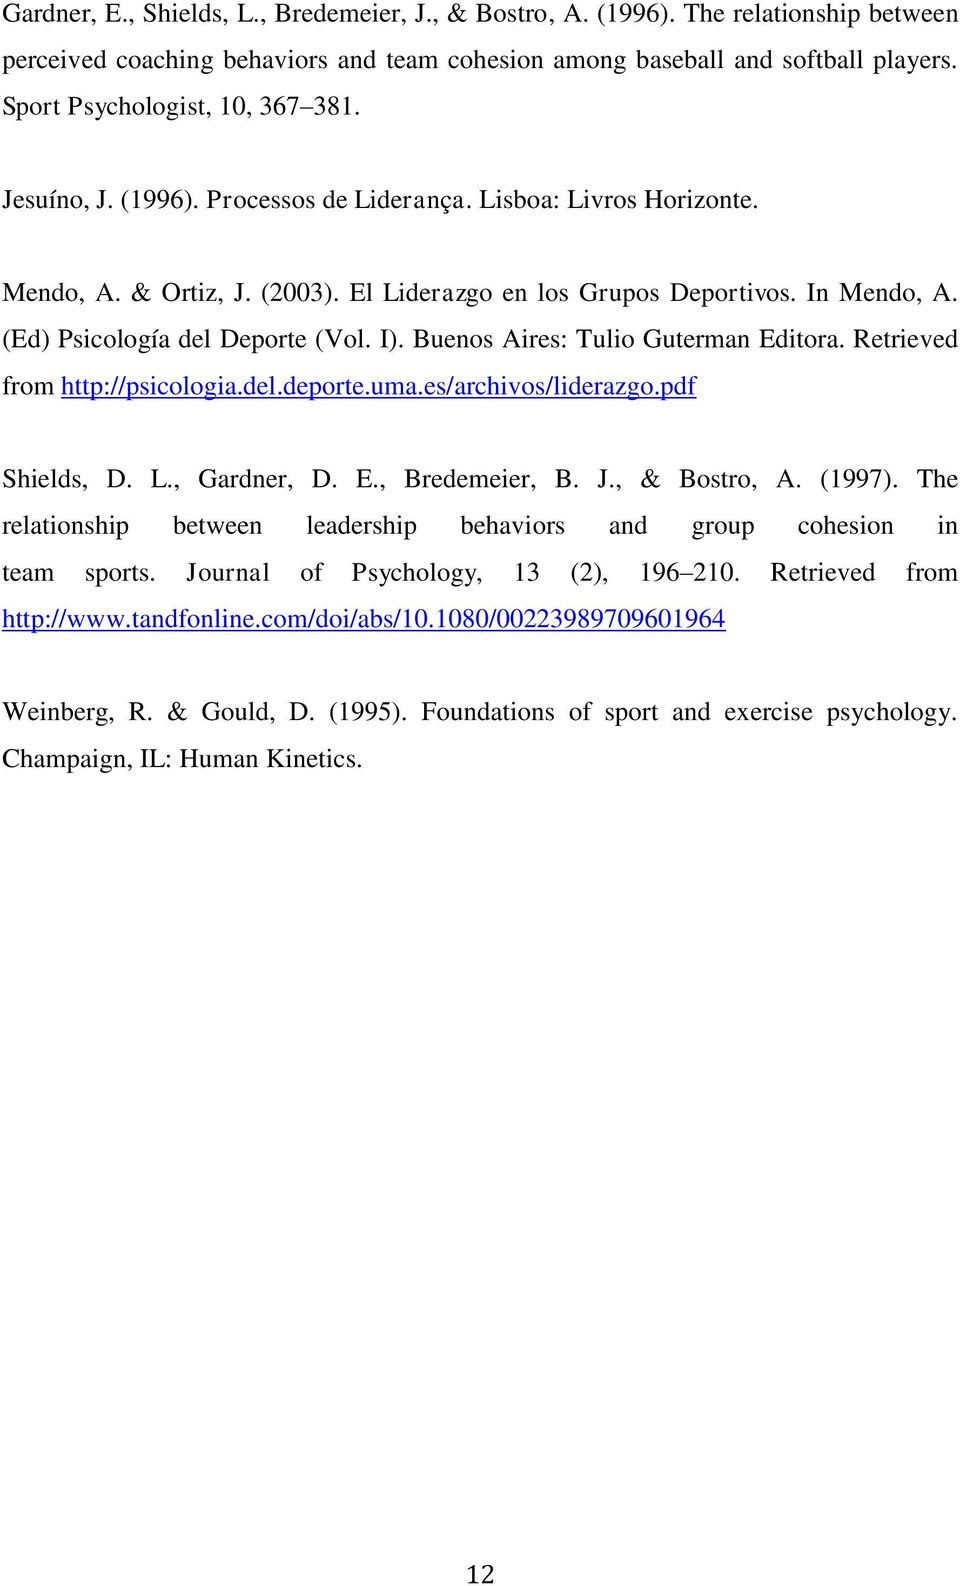 (Ed) Psicología del Deporte (Vol. I). Buenos Aires: Tulio Guterman Editora. Retrieved from http://psicologia.del.deporte.uma.es/archivos/liderazgo.pdf Shields, D. L., Gardner, D. E., Bredemeier, B. J.